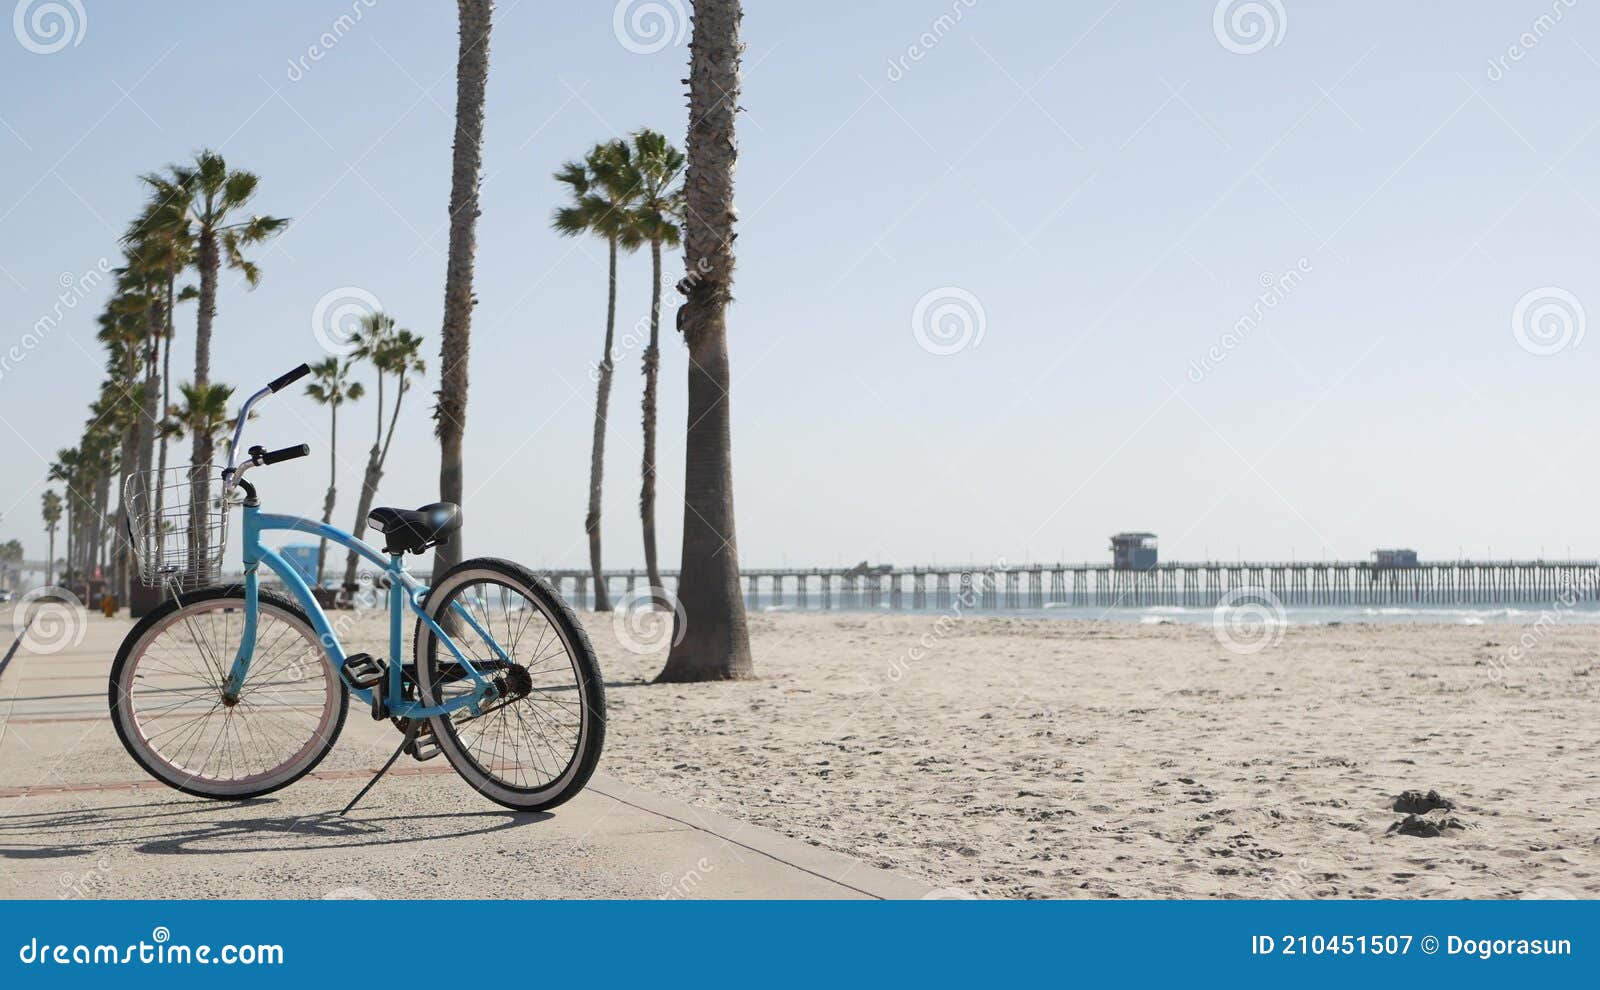 bicycle cruiser bike by ocean beach, california coast usa. summer cycle, lifeguard hut and palm tree